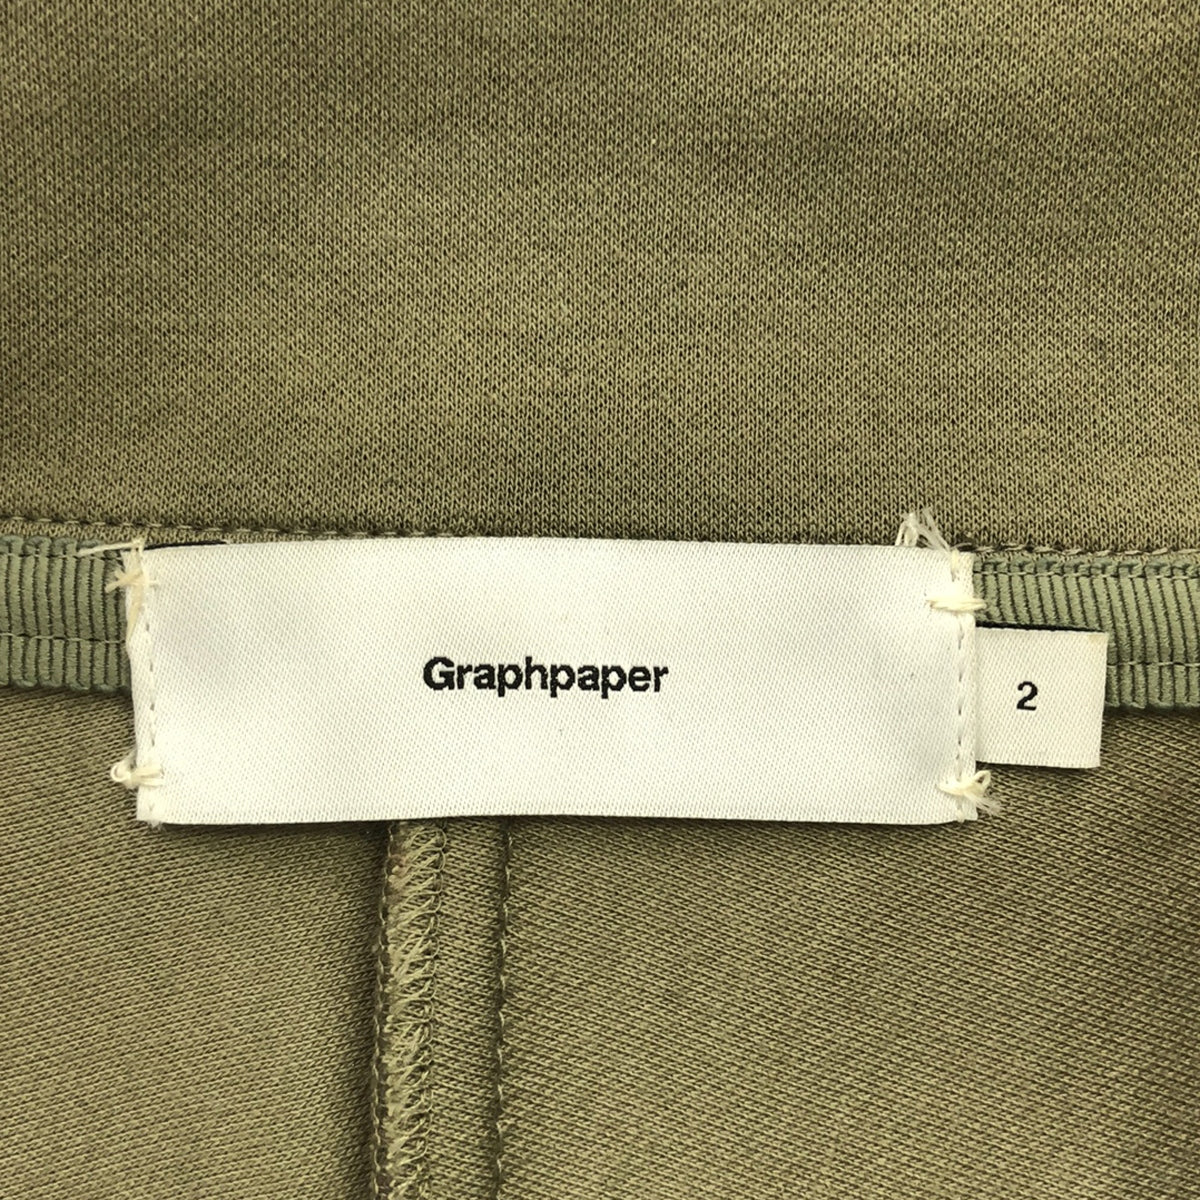 Graphpaper / グラフペーパー | Military Jersey Half Zip Pullover / ミリタリー ハーフジップ プルオーバー | 2 | グリーン | メンズ